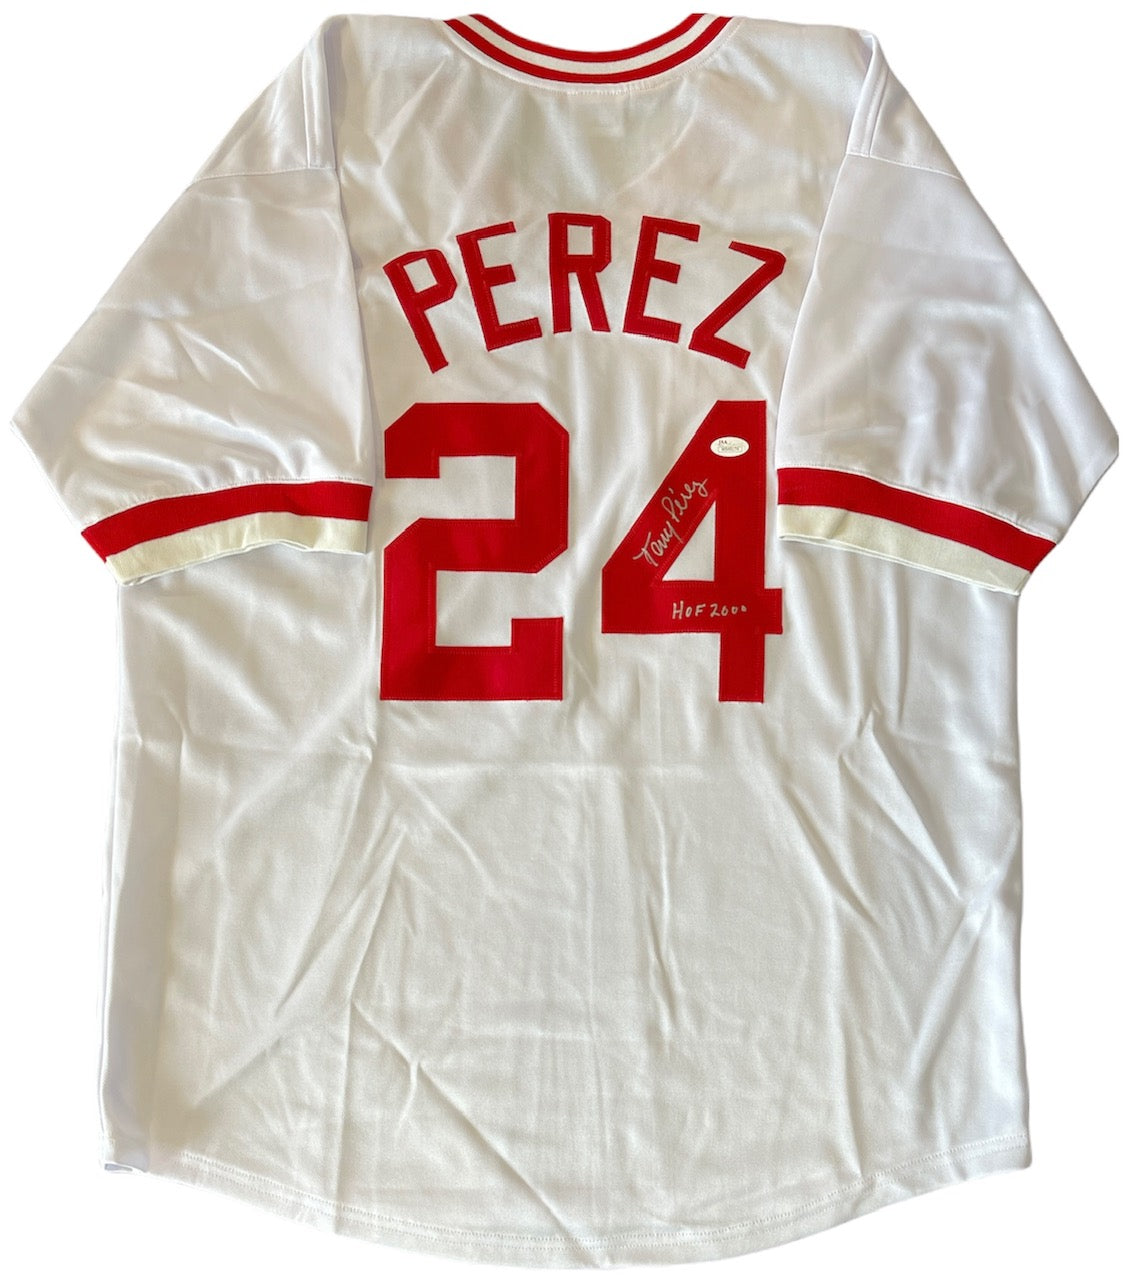 Autographed/Signed Tony Perez Cincinnati Grey Baseball Jersey